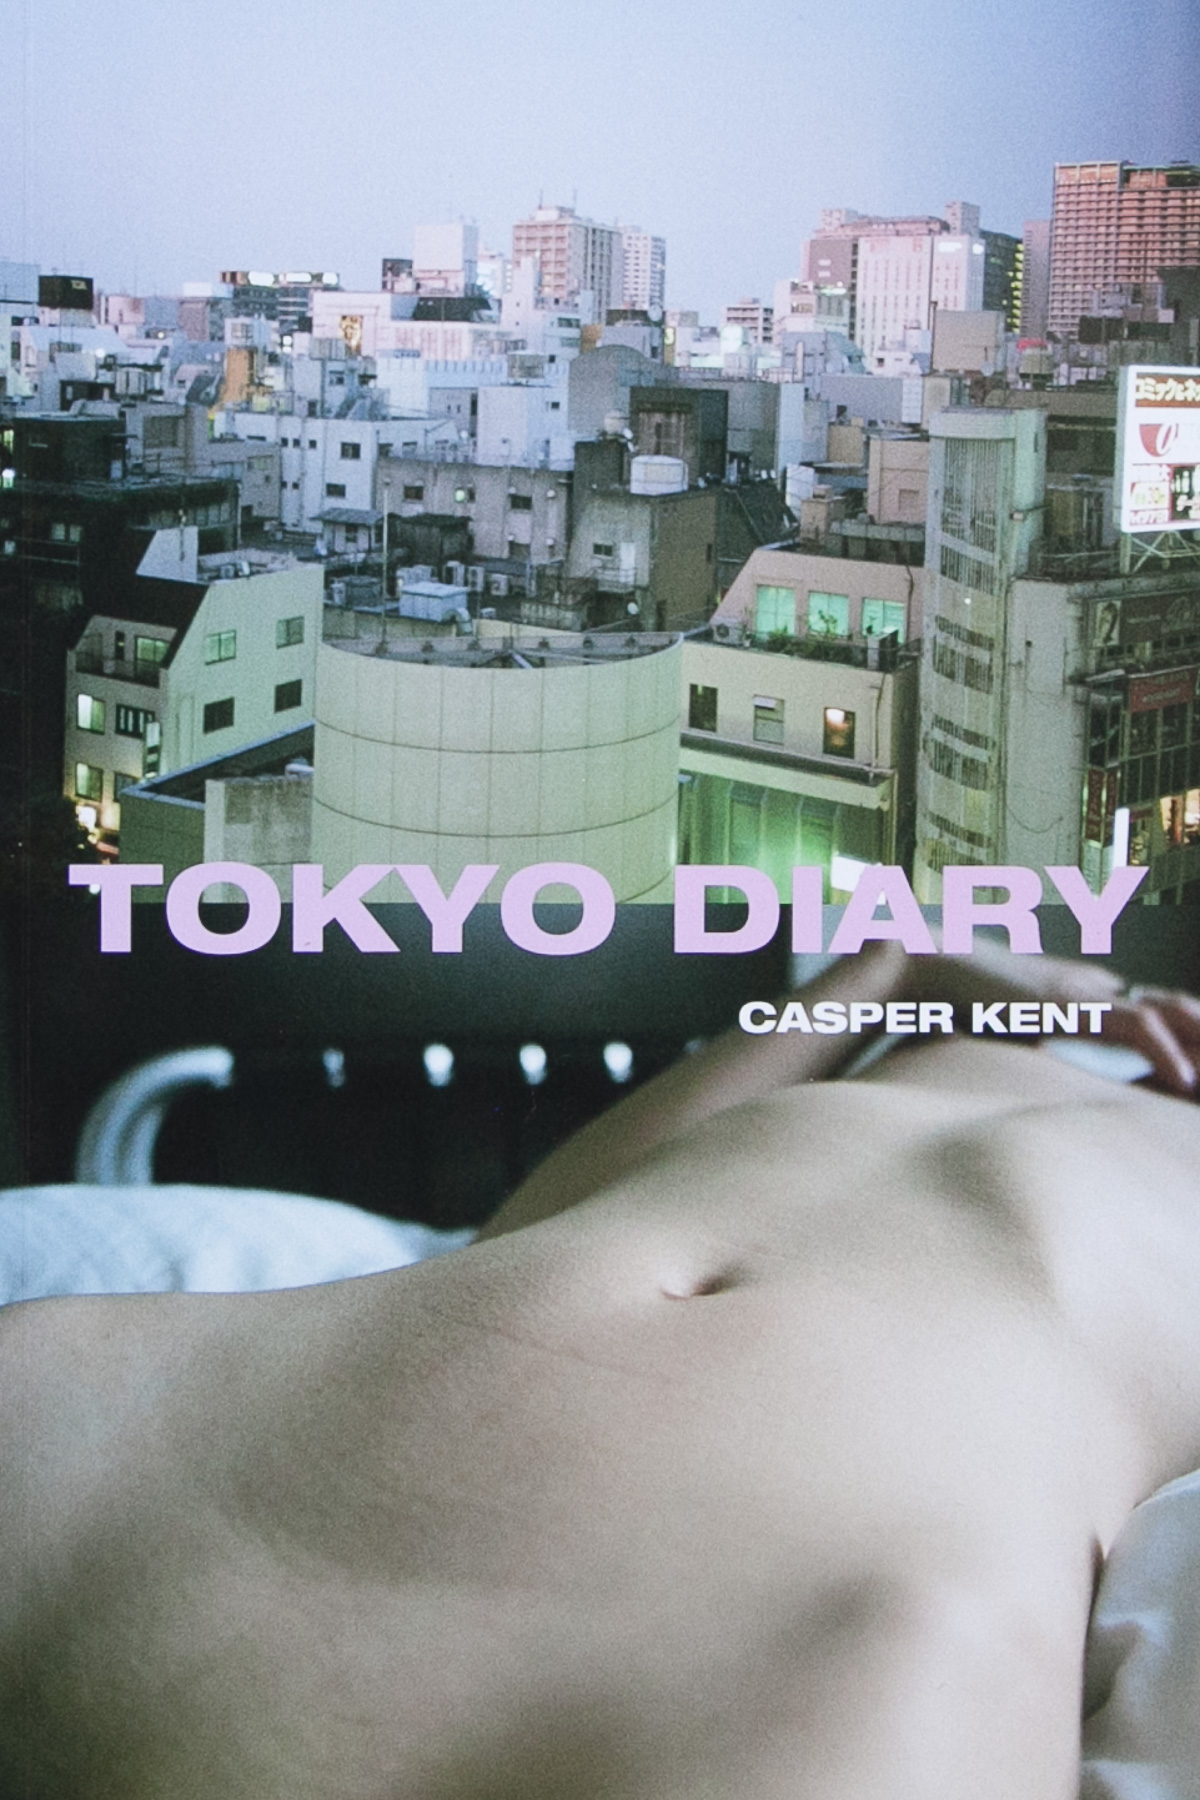 Tokyo diary